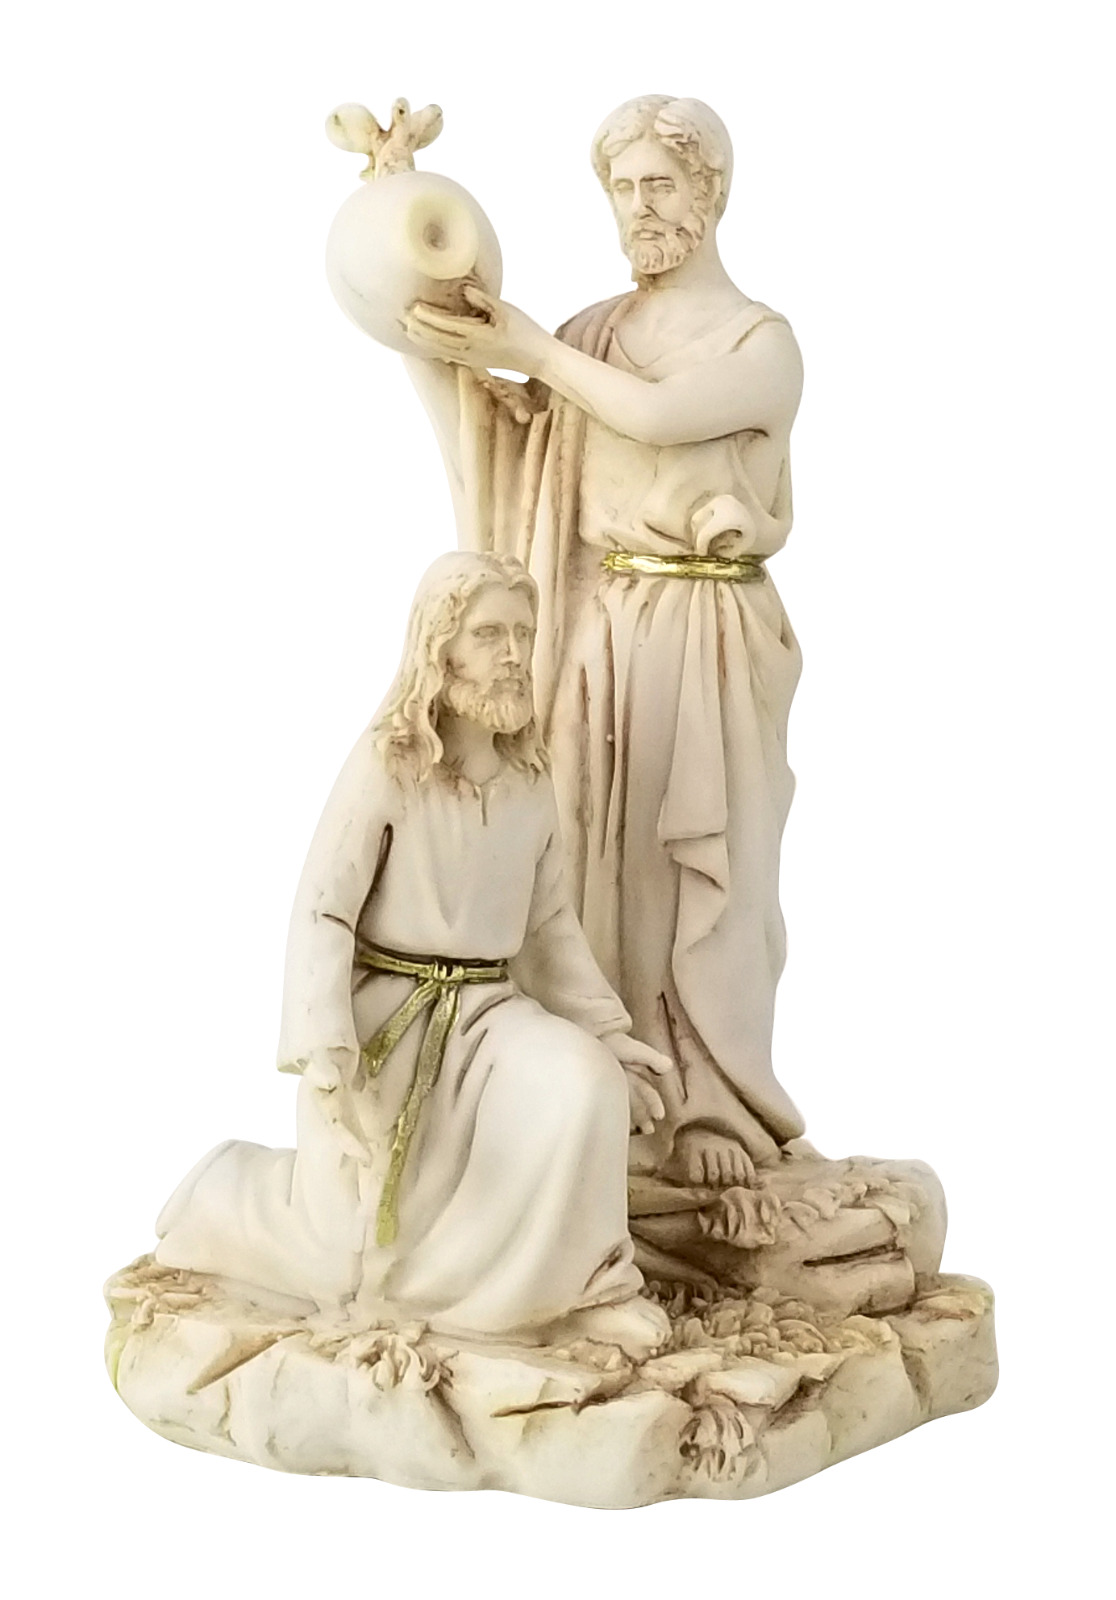 The Baptism of Jesus Christ Resin statue figurine / Baptism Favor Gift, Decor